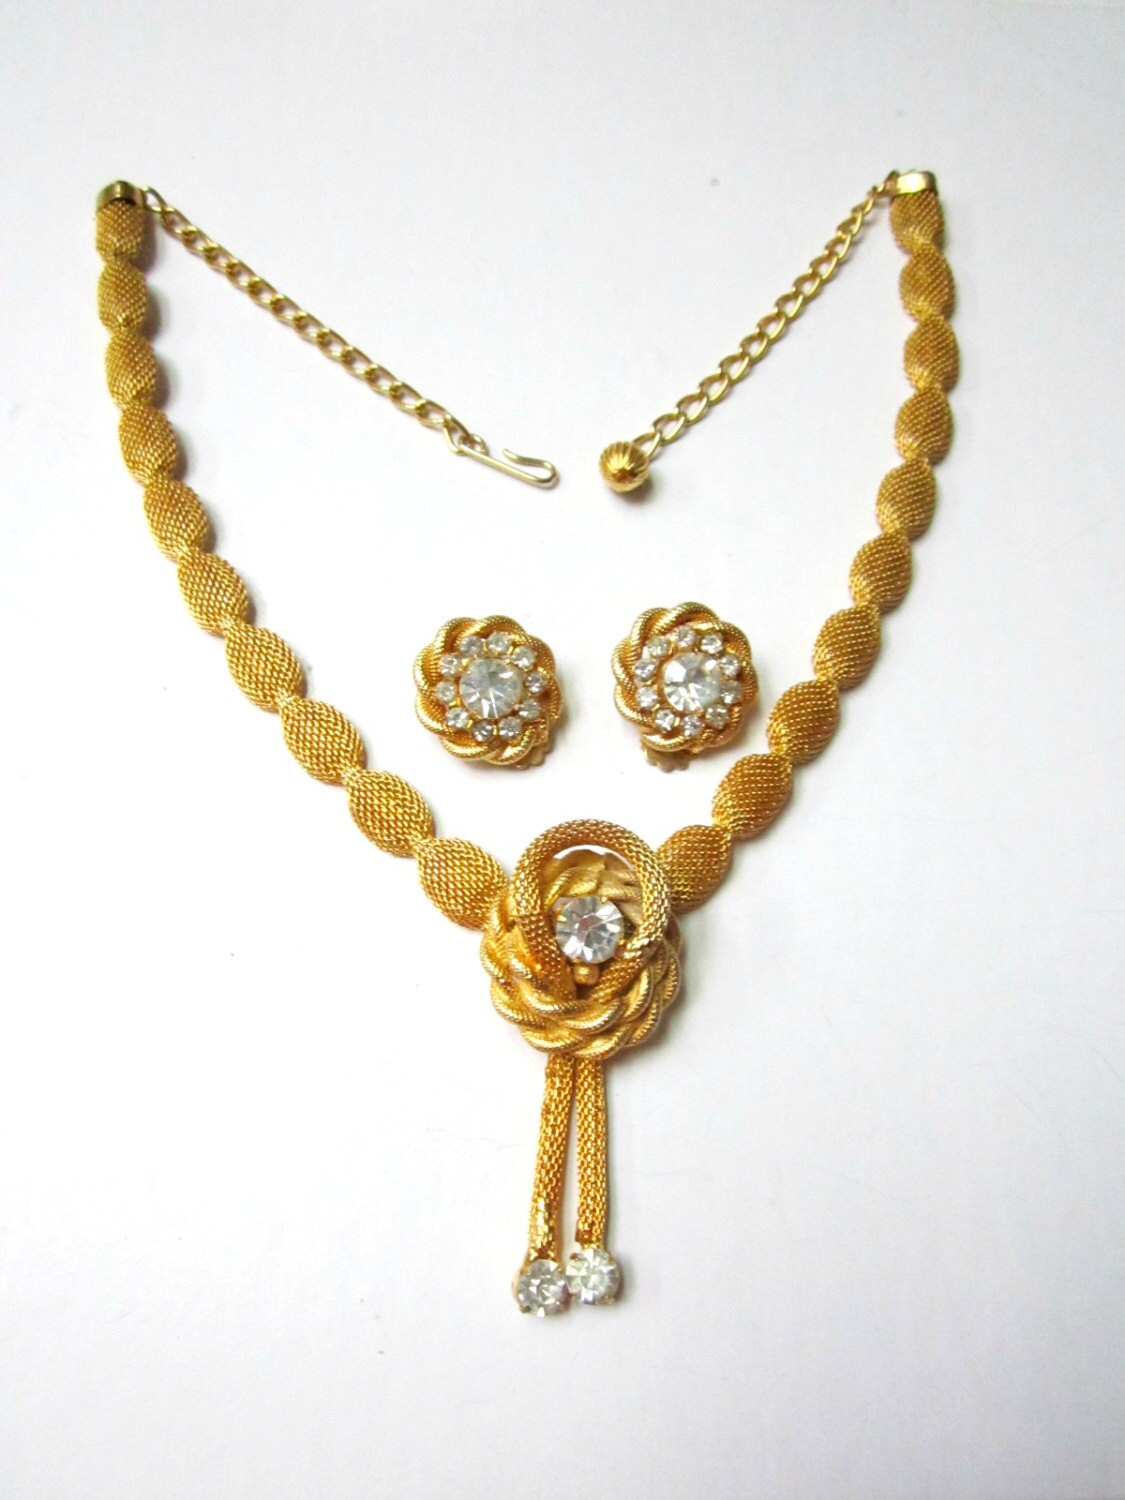 Vintage Twisted Gold Necklace Rhinestone Lariat Style Necklace